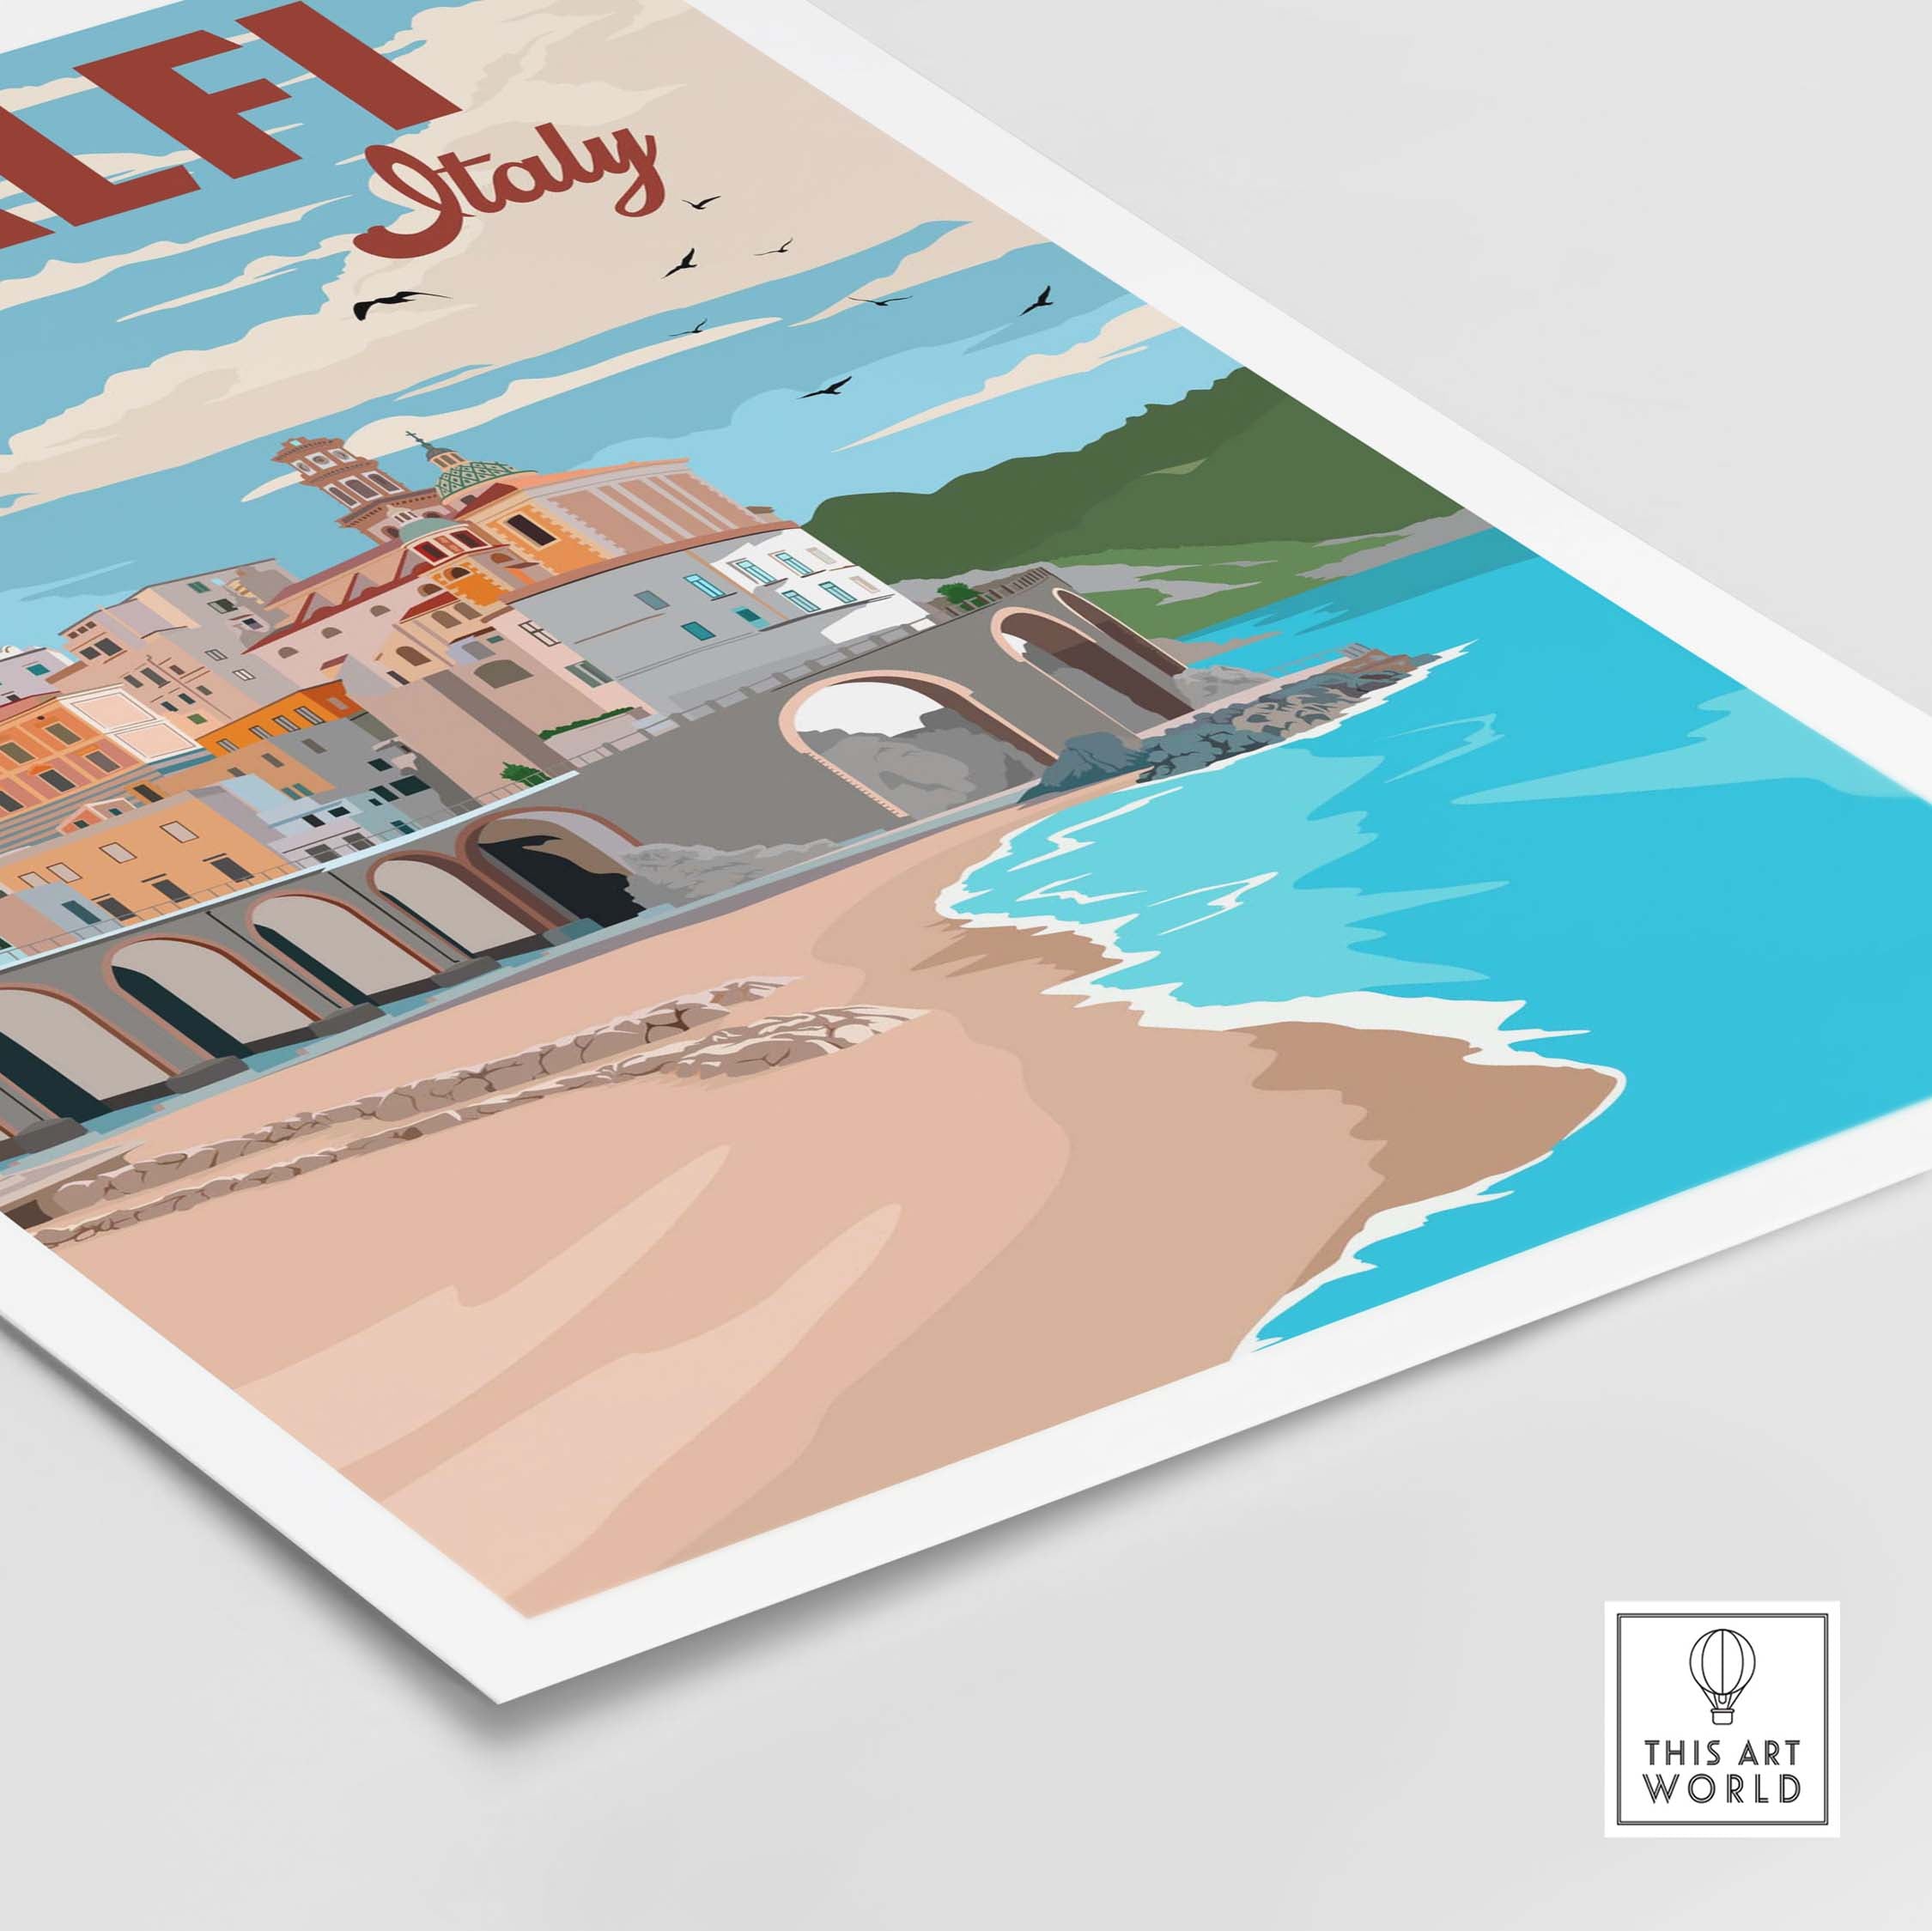 amalfi coast italy print wall art | vintage poster